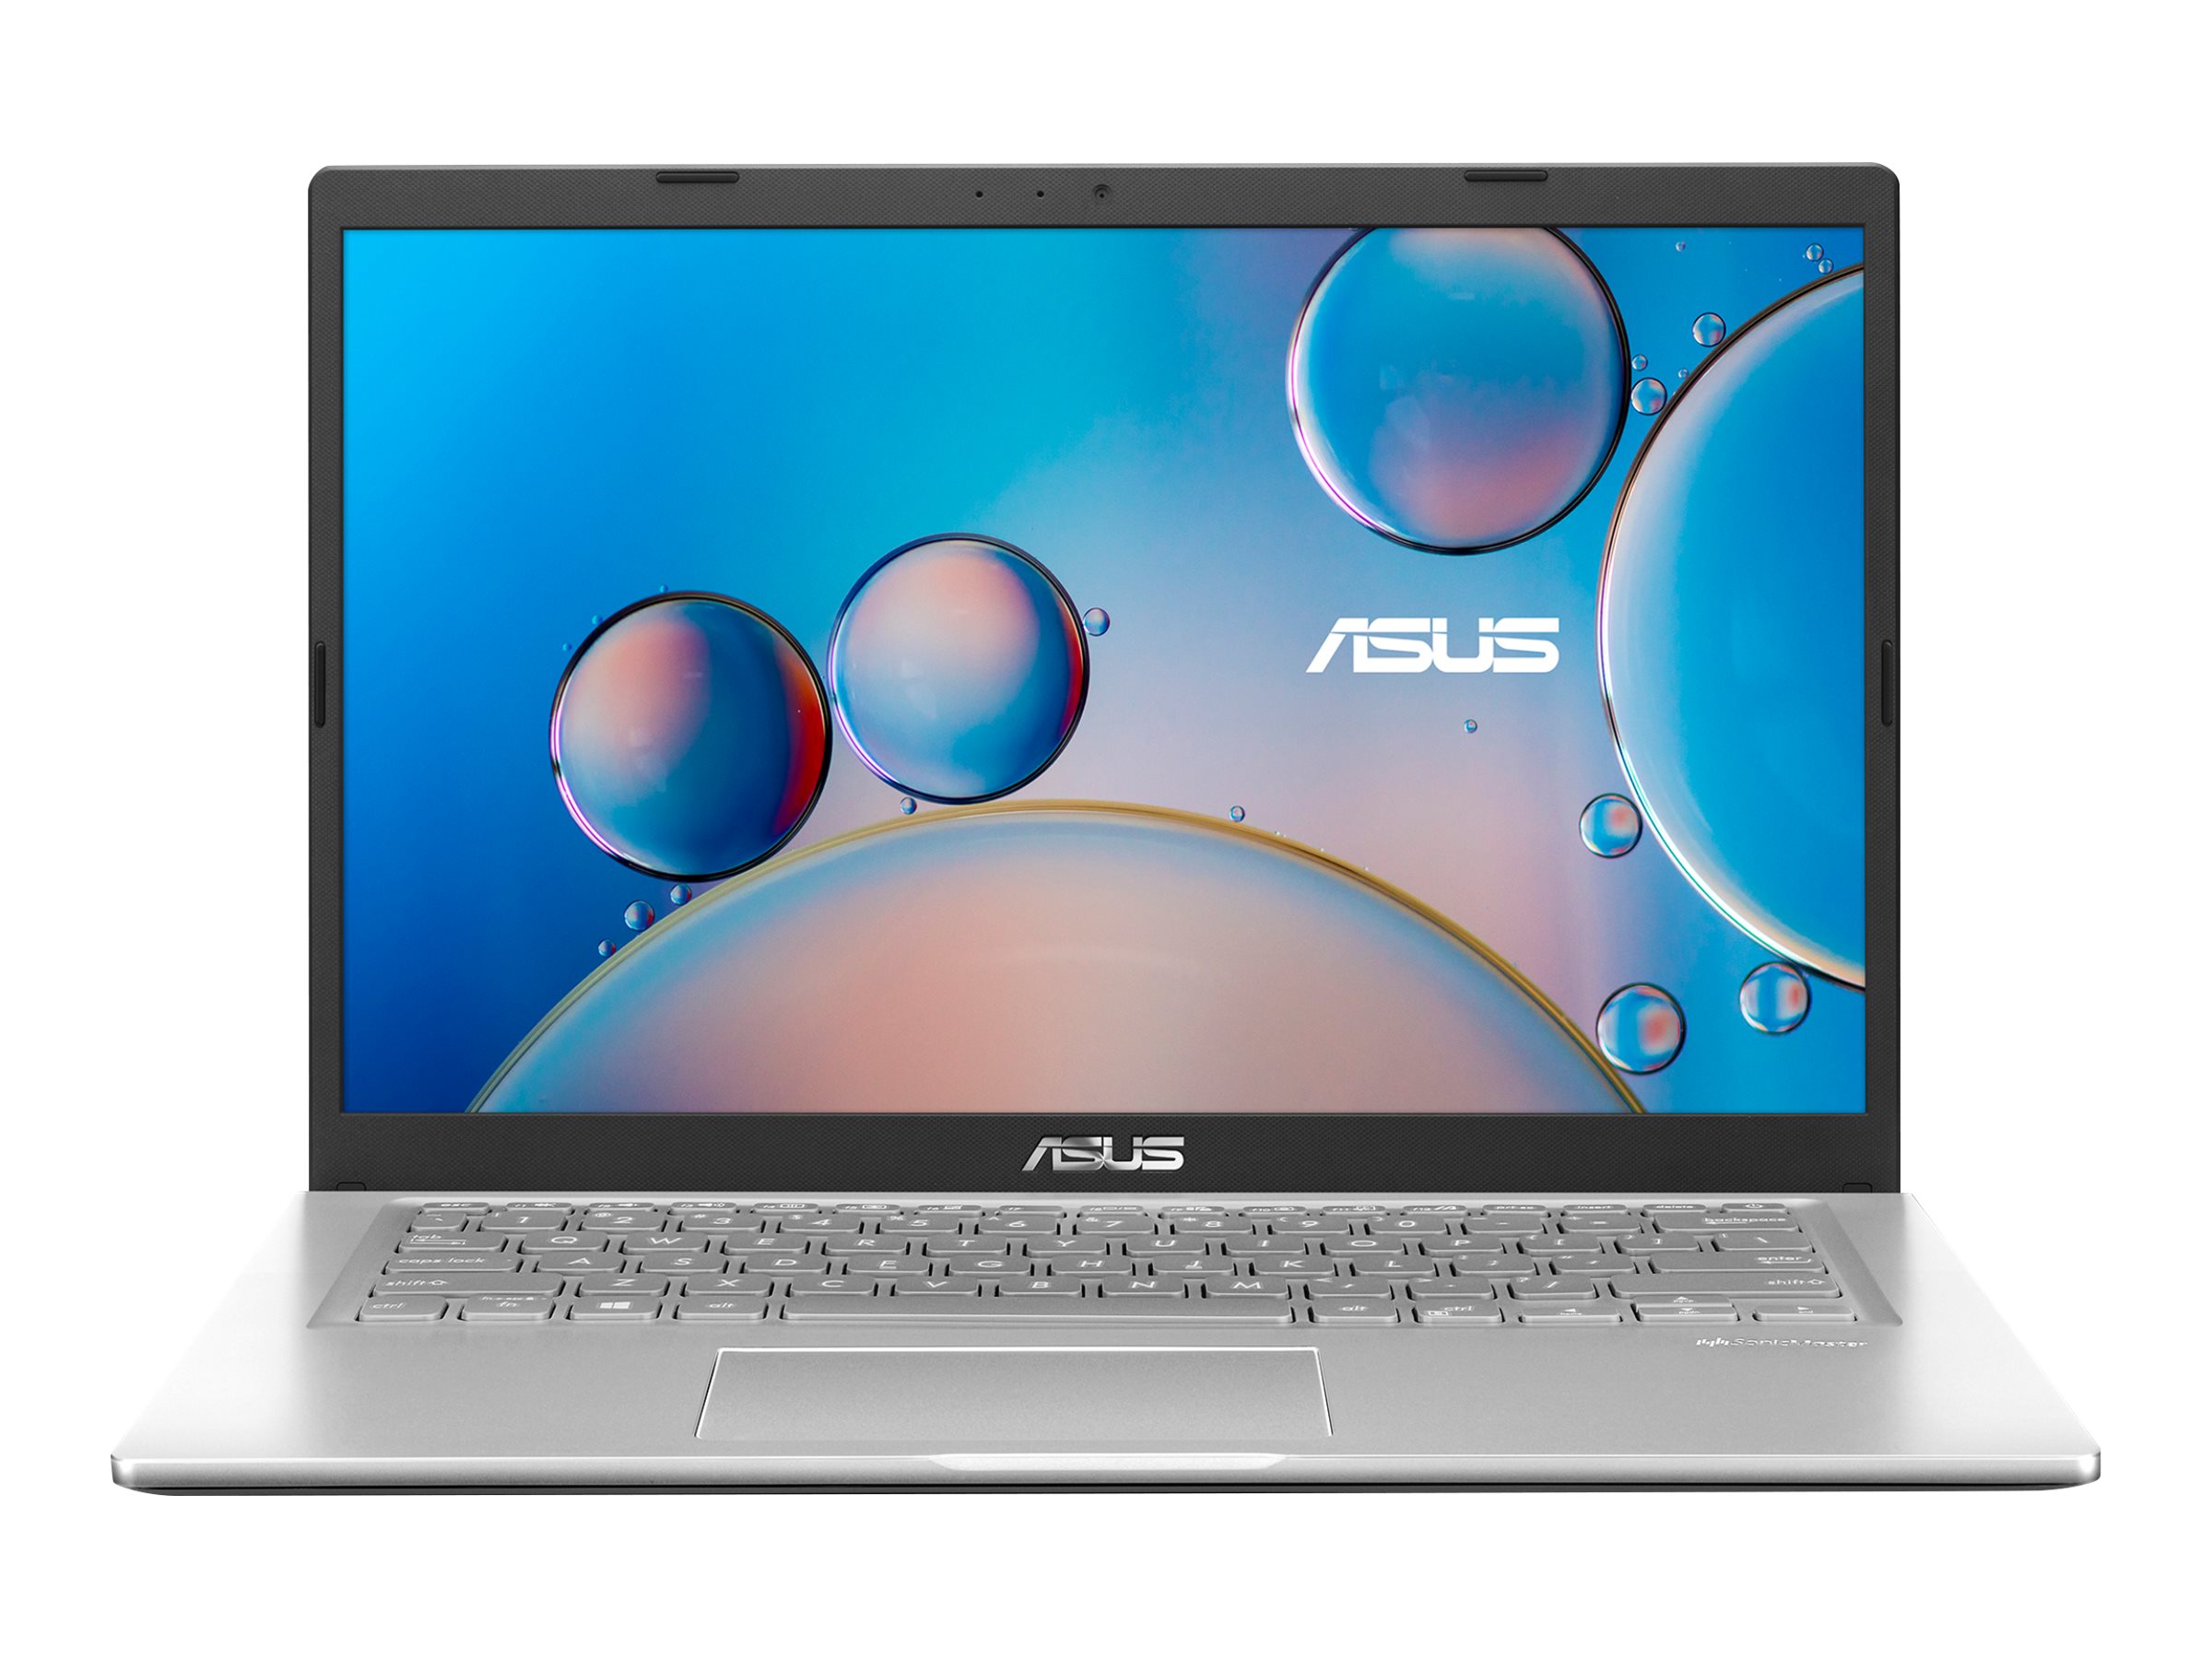 ASUS VivoBook 14 (M413DA) - full specs, details and review